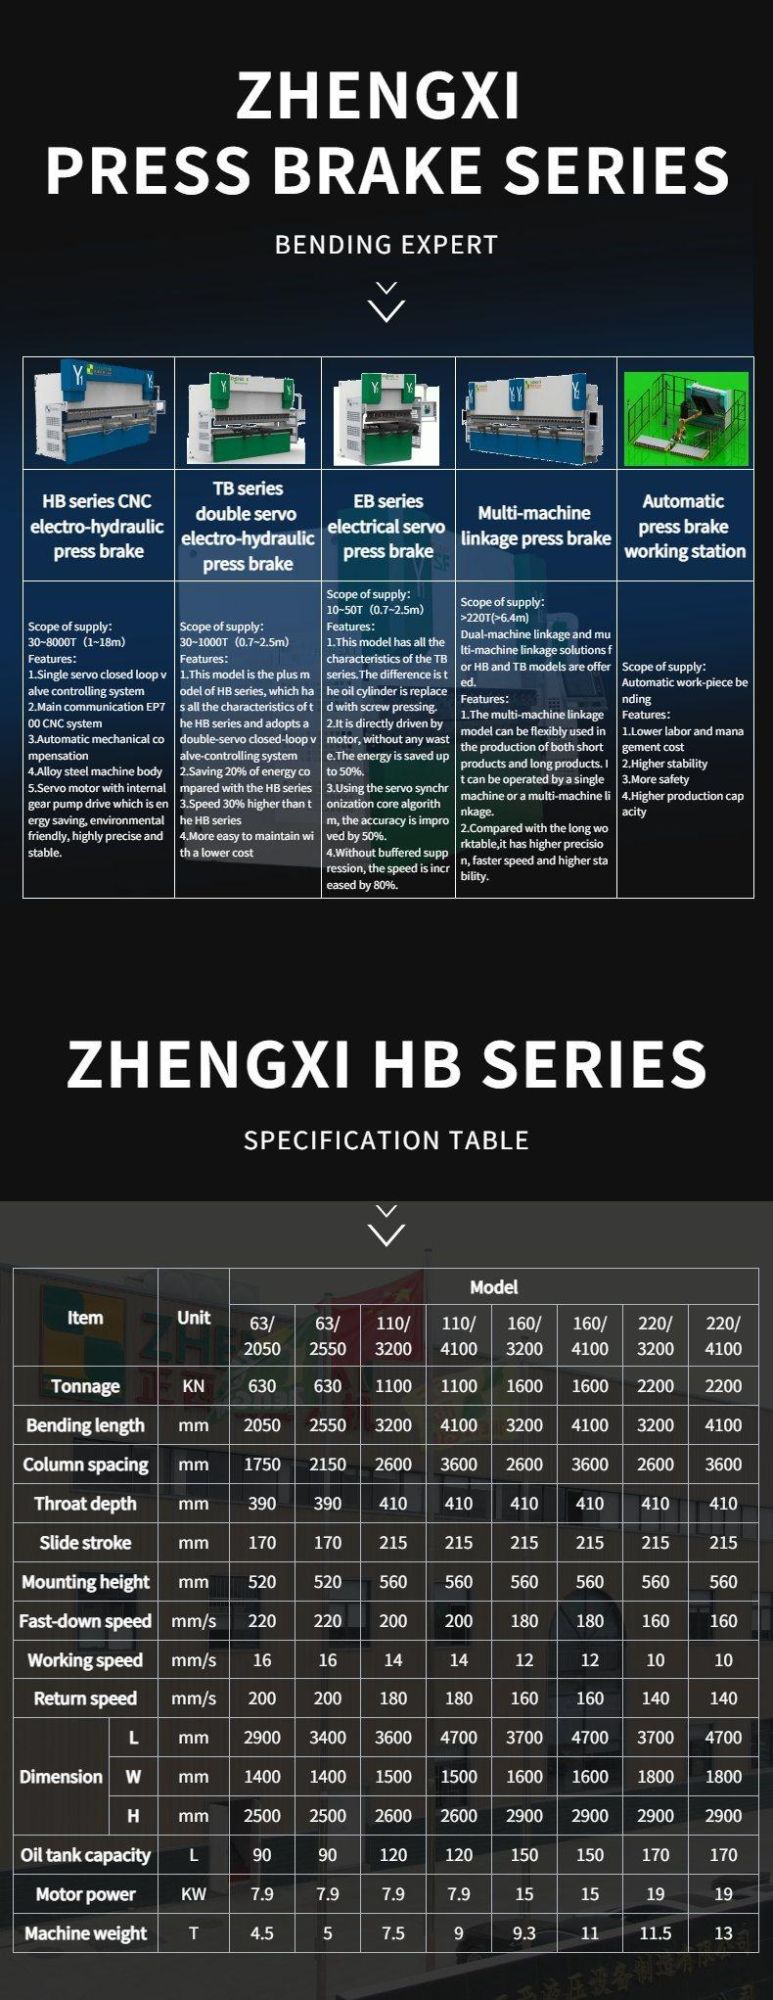 Zhengxi 220t Bending Machine for Stainless Steel Sheet